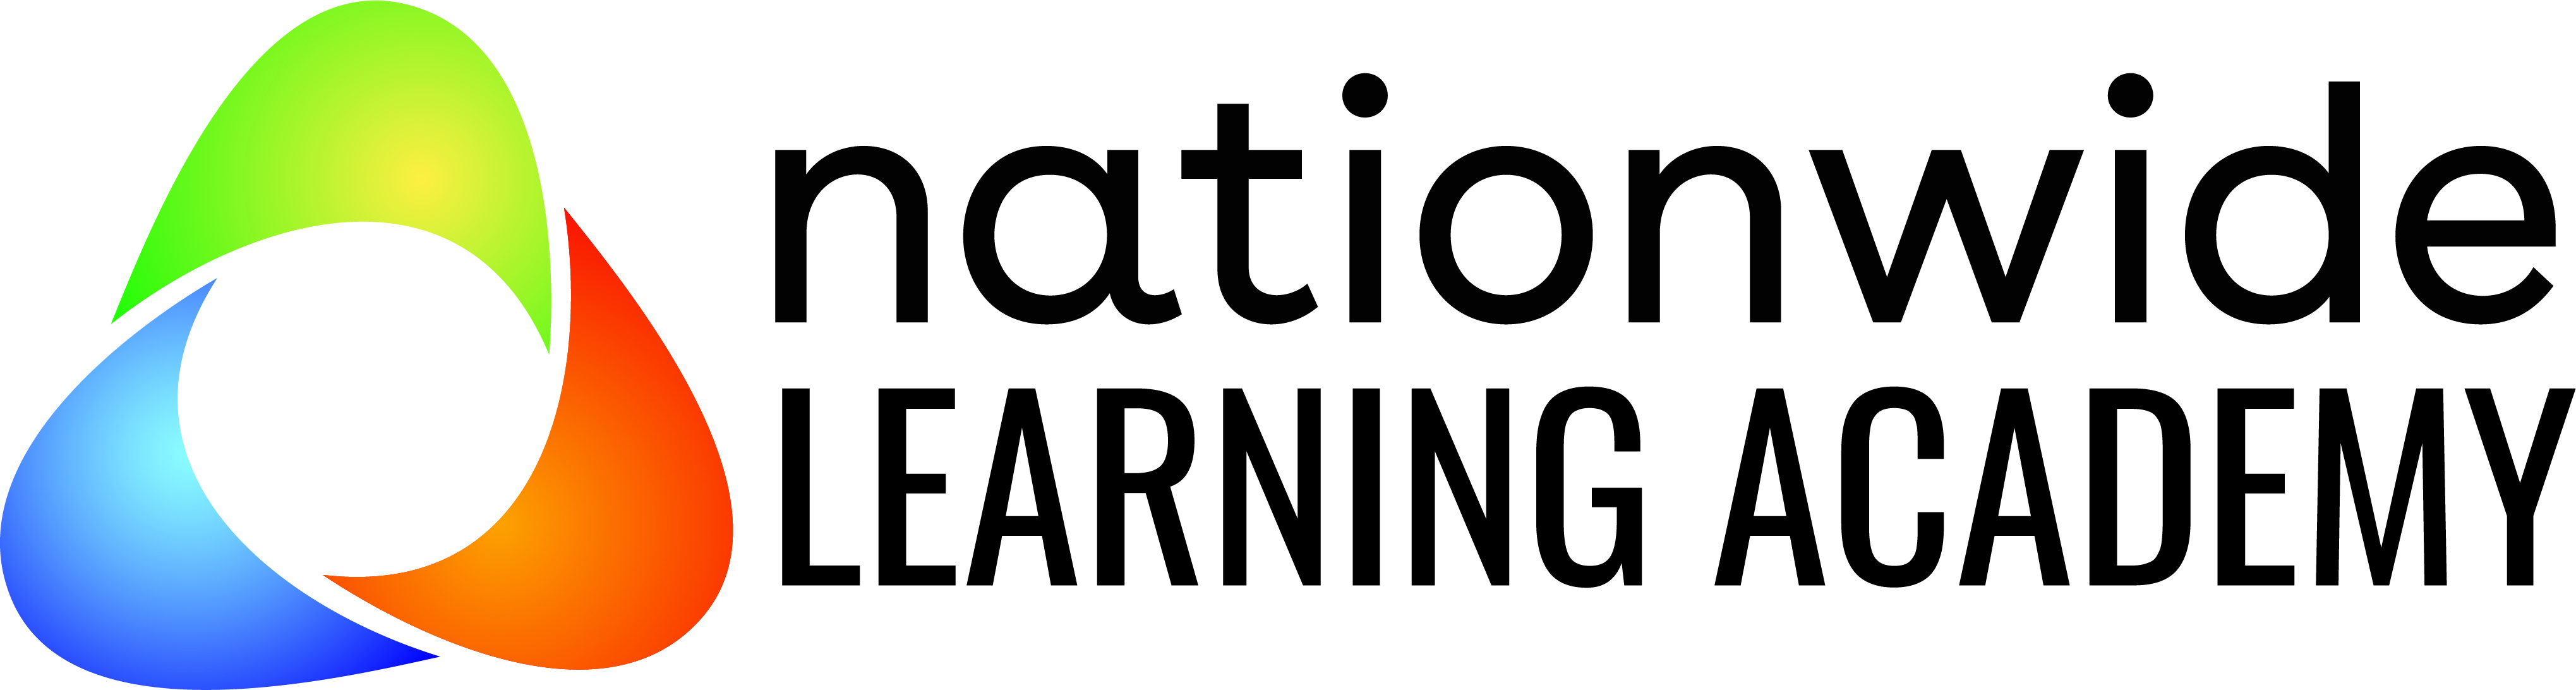 , Nationwide Learning Academy, Nationwide Marketing Group